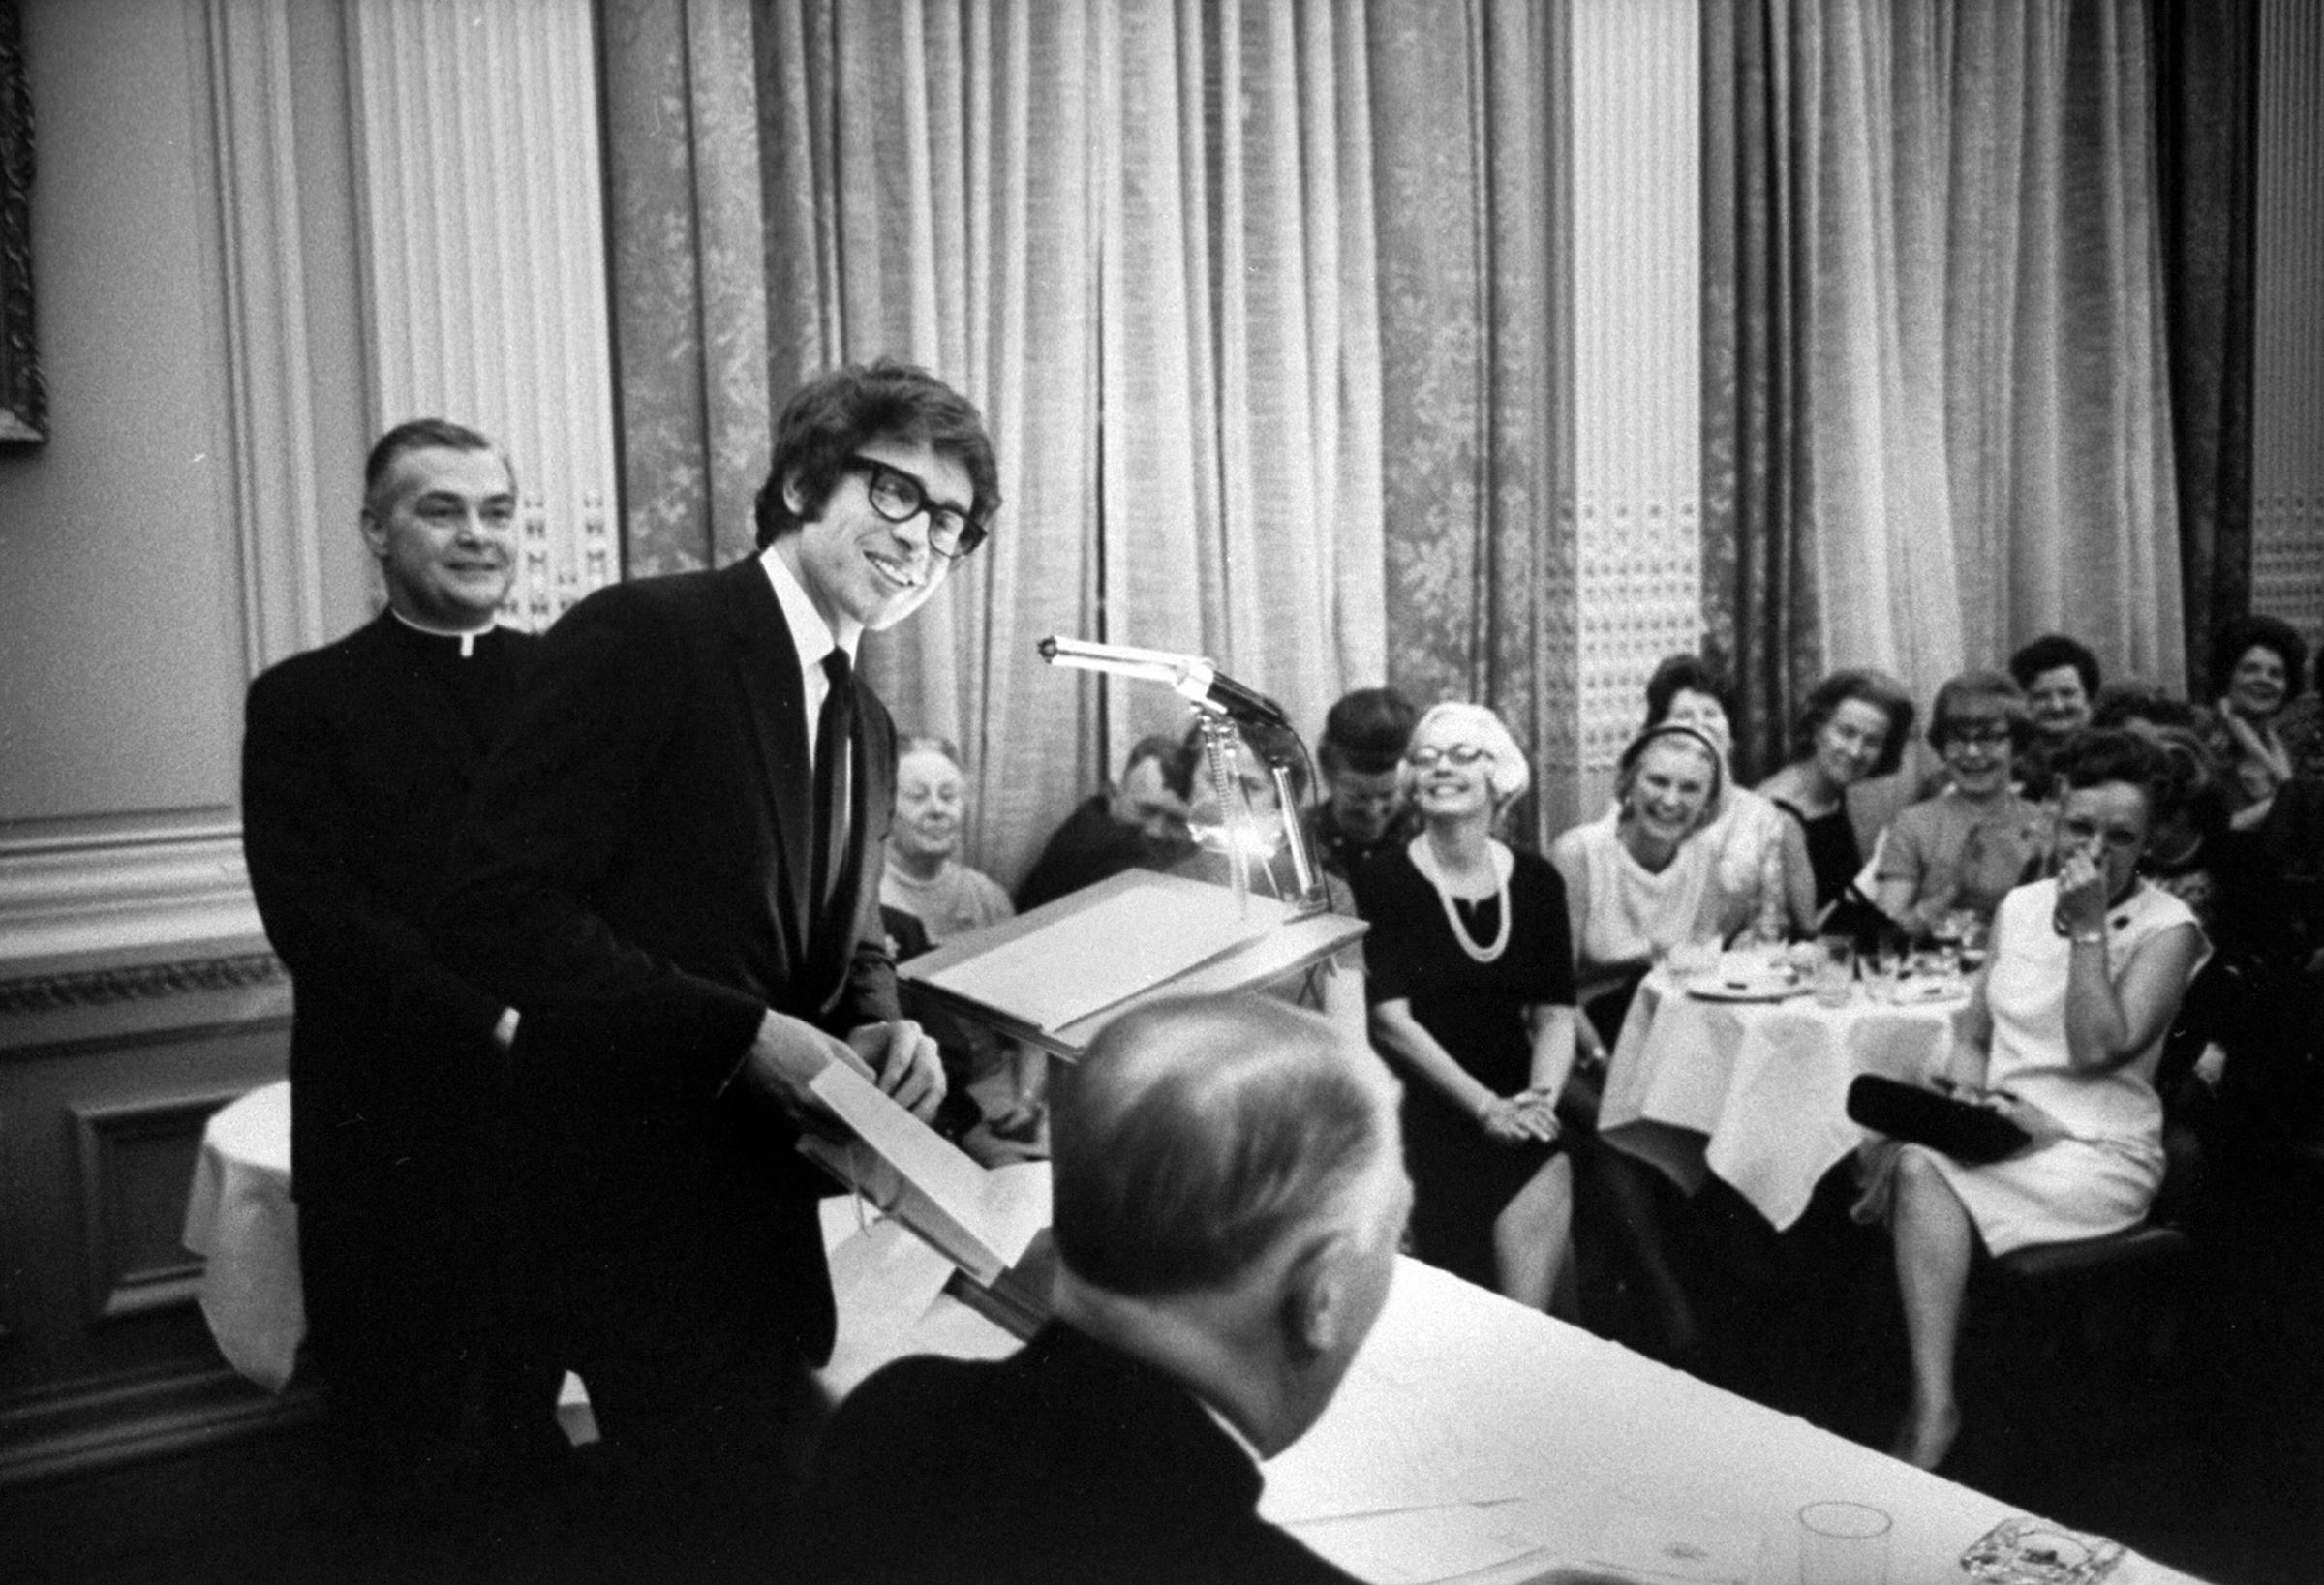 Warren Beatty accepting an award in 1968.